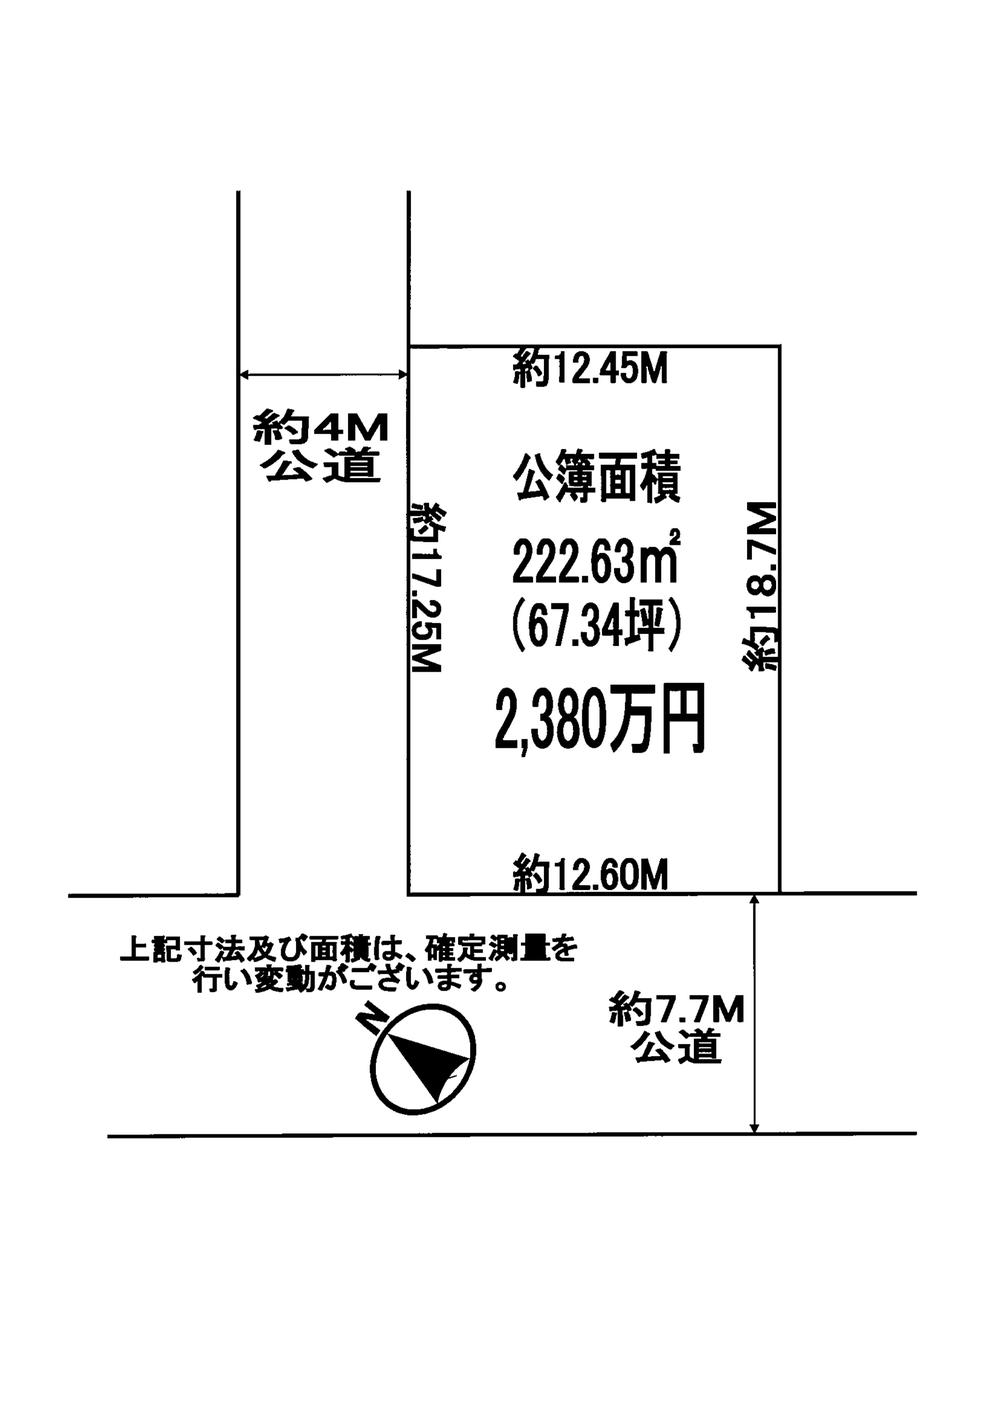 Compartment figure. Land price 23.8 million yen, Land area 222.63 sq m